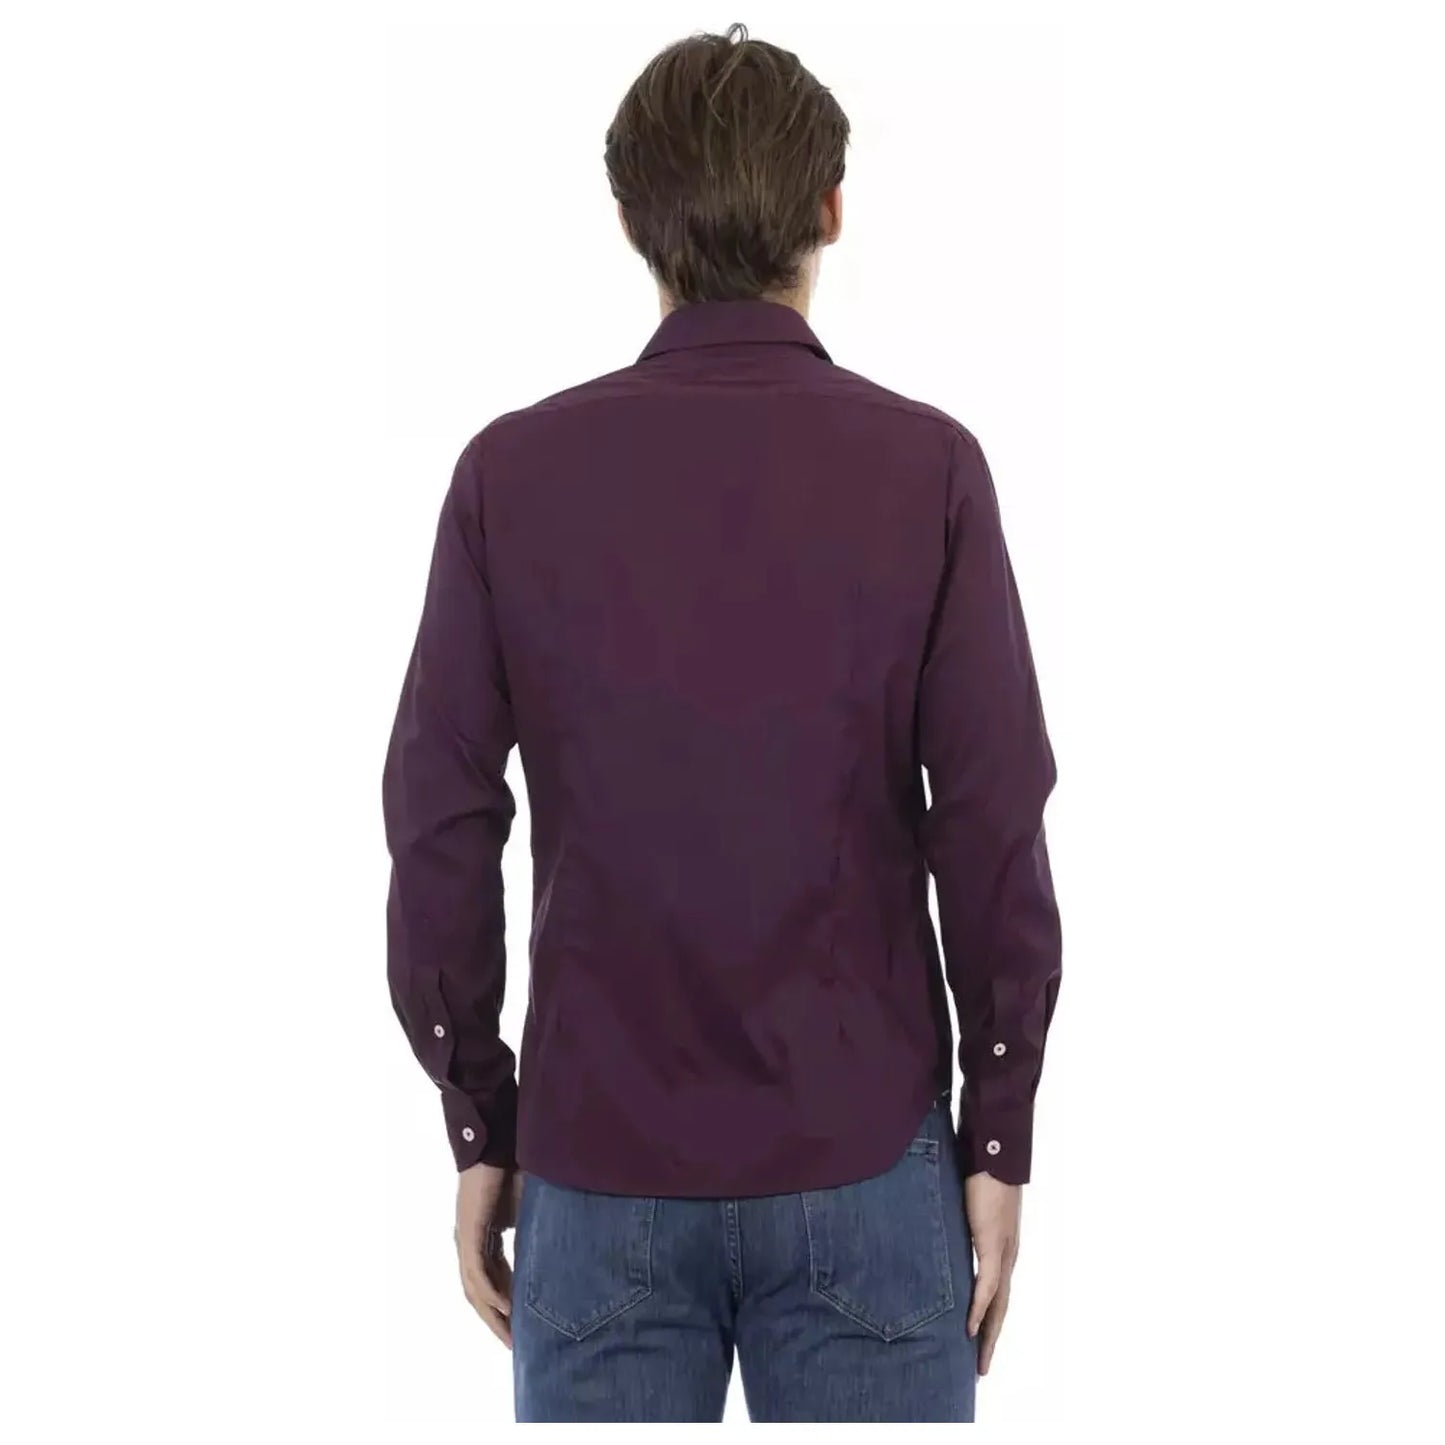 Baldinini Trend Chic Bordeaux Slim Fit Men's Shirt burgundy-cotton-shirt-5 product-22601-495965626-21-7b559e91-f93.webp